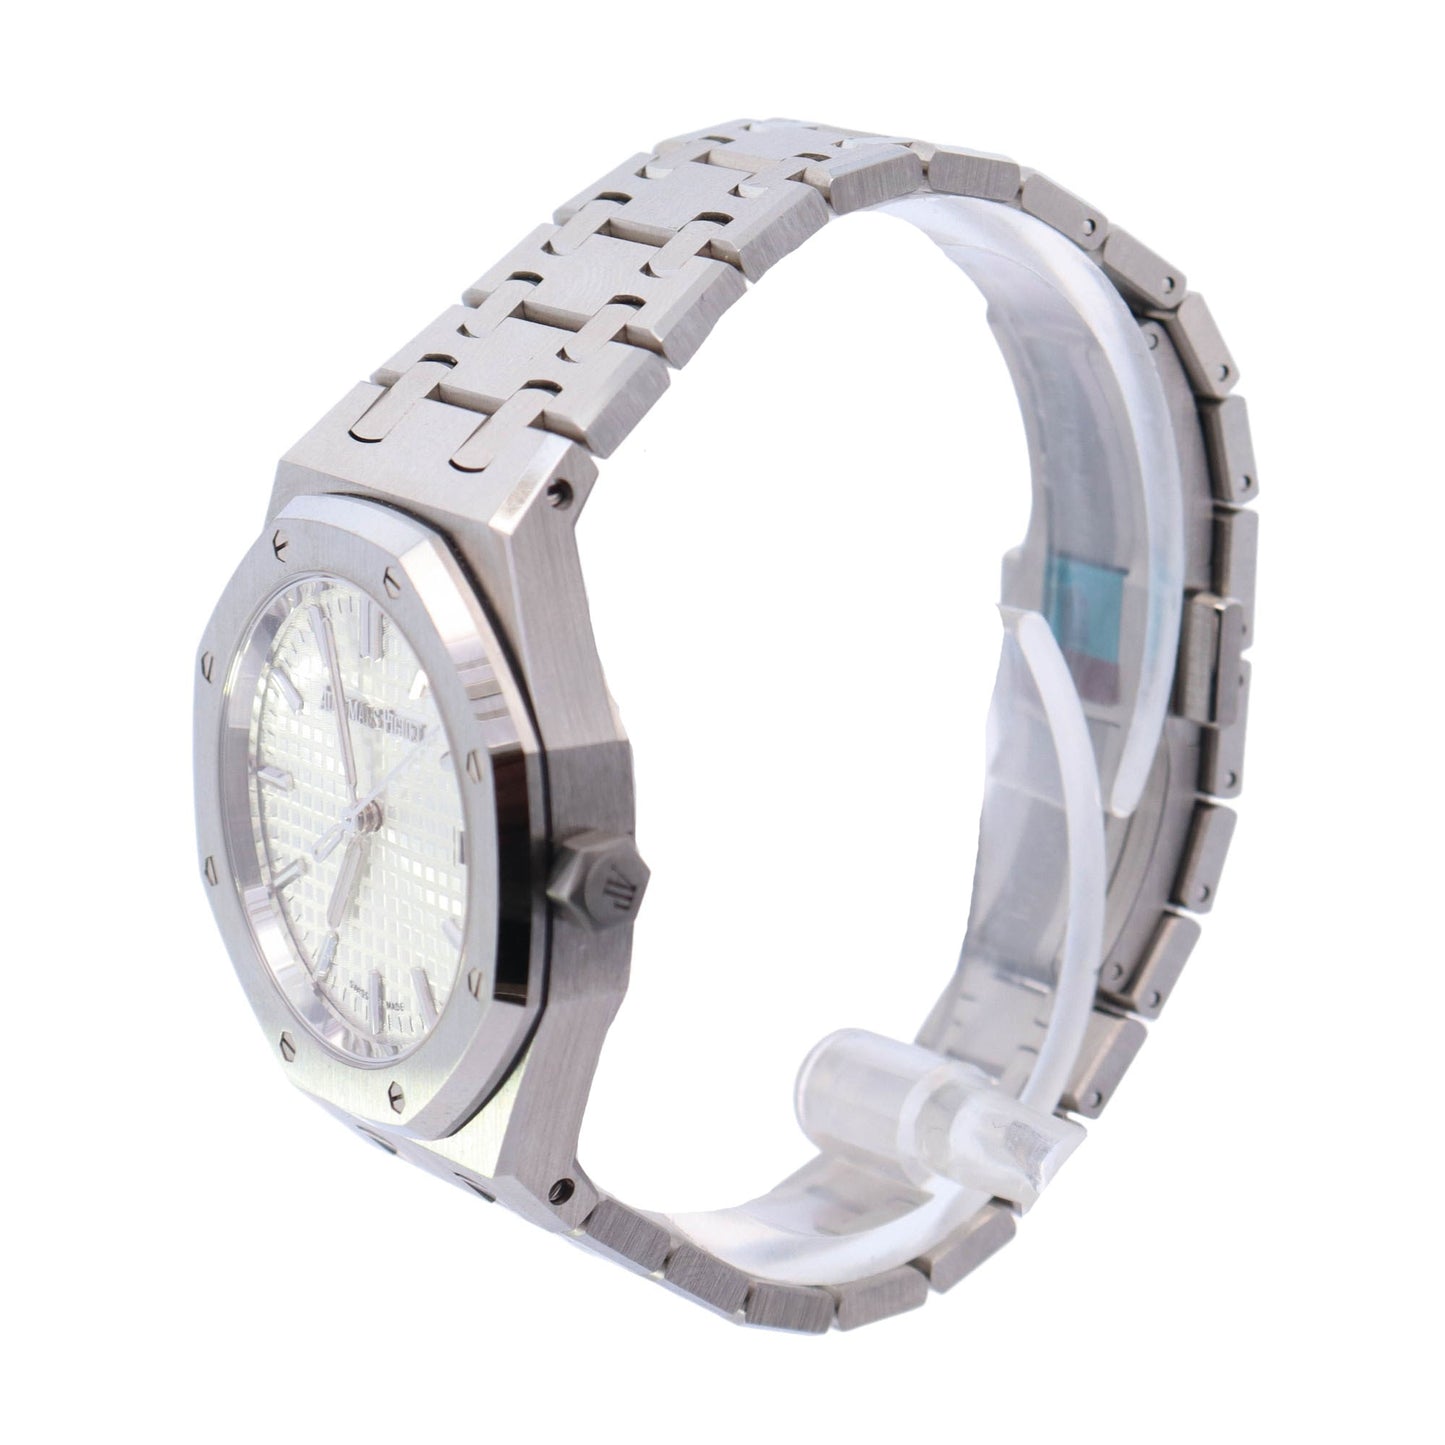 Audemars Piguet Royal Oak Stainless Steel 34mm White Grande Tapisserie Dial Watch Reference# 77450ST.OO.1361ST.01 - Happy Jewelers Fine Jewelry Lifetime Warranty